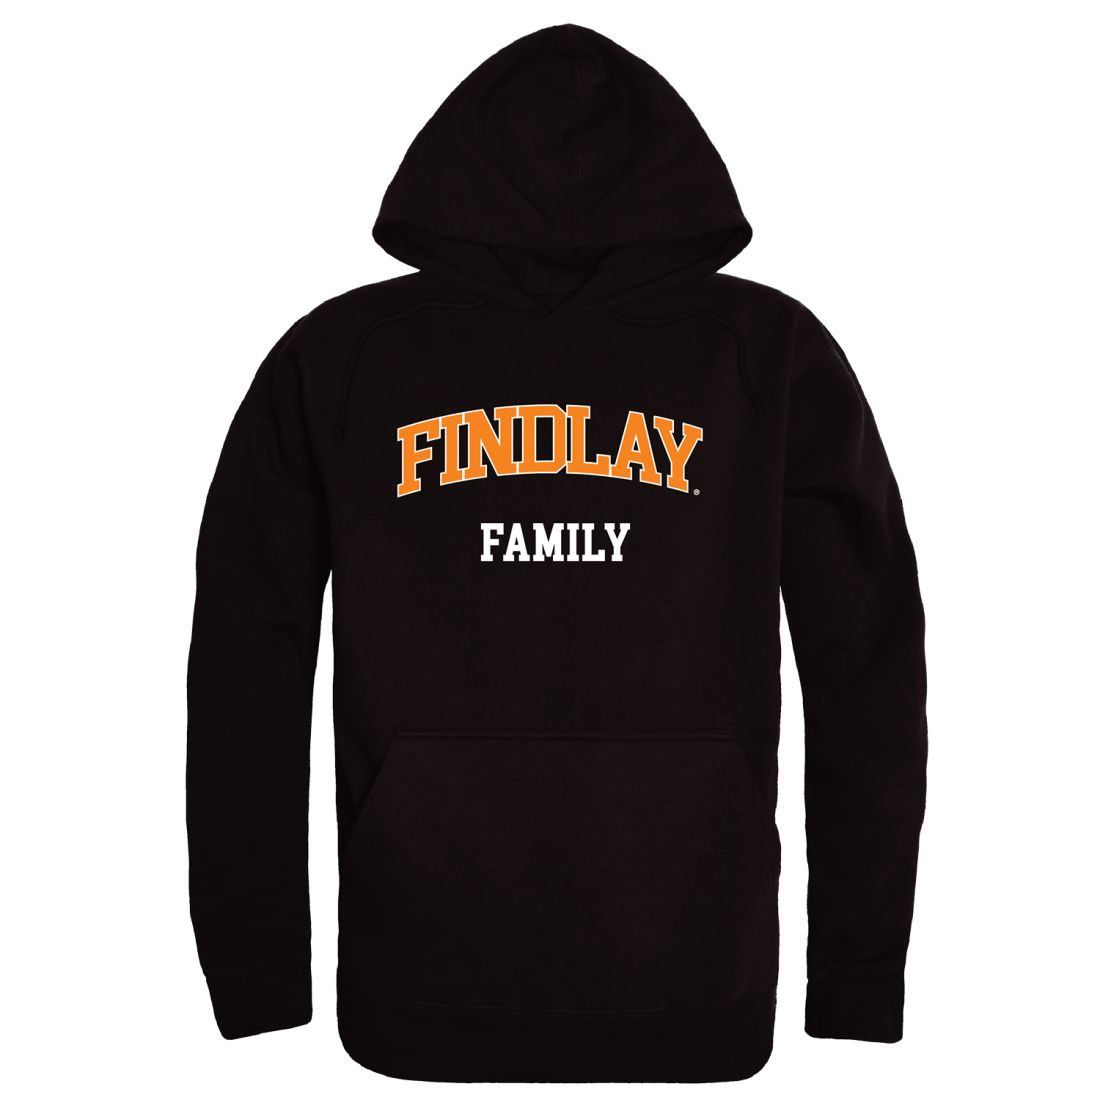 The University of Findlay Oilers Family Hoodie Sweatshirts